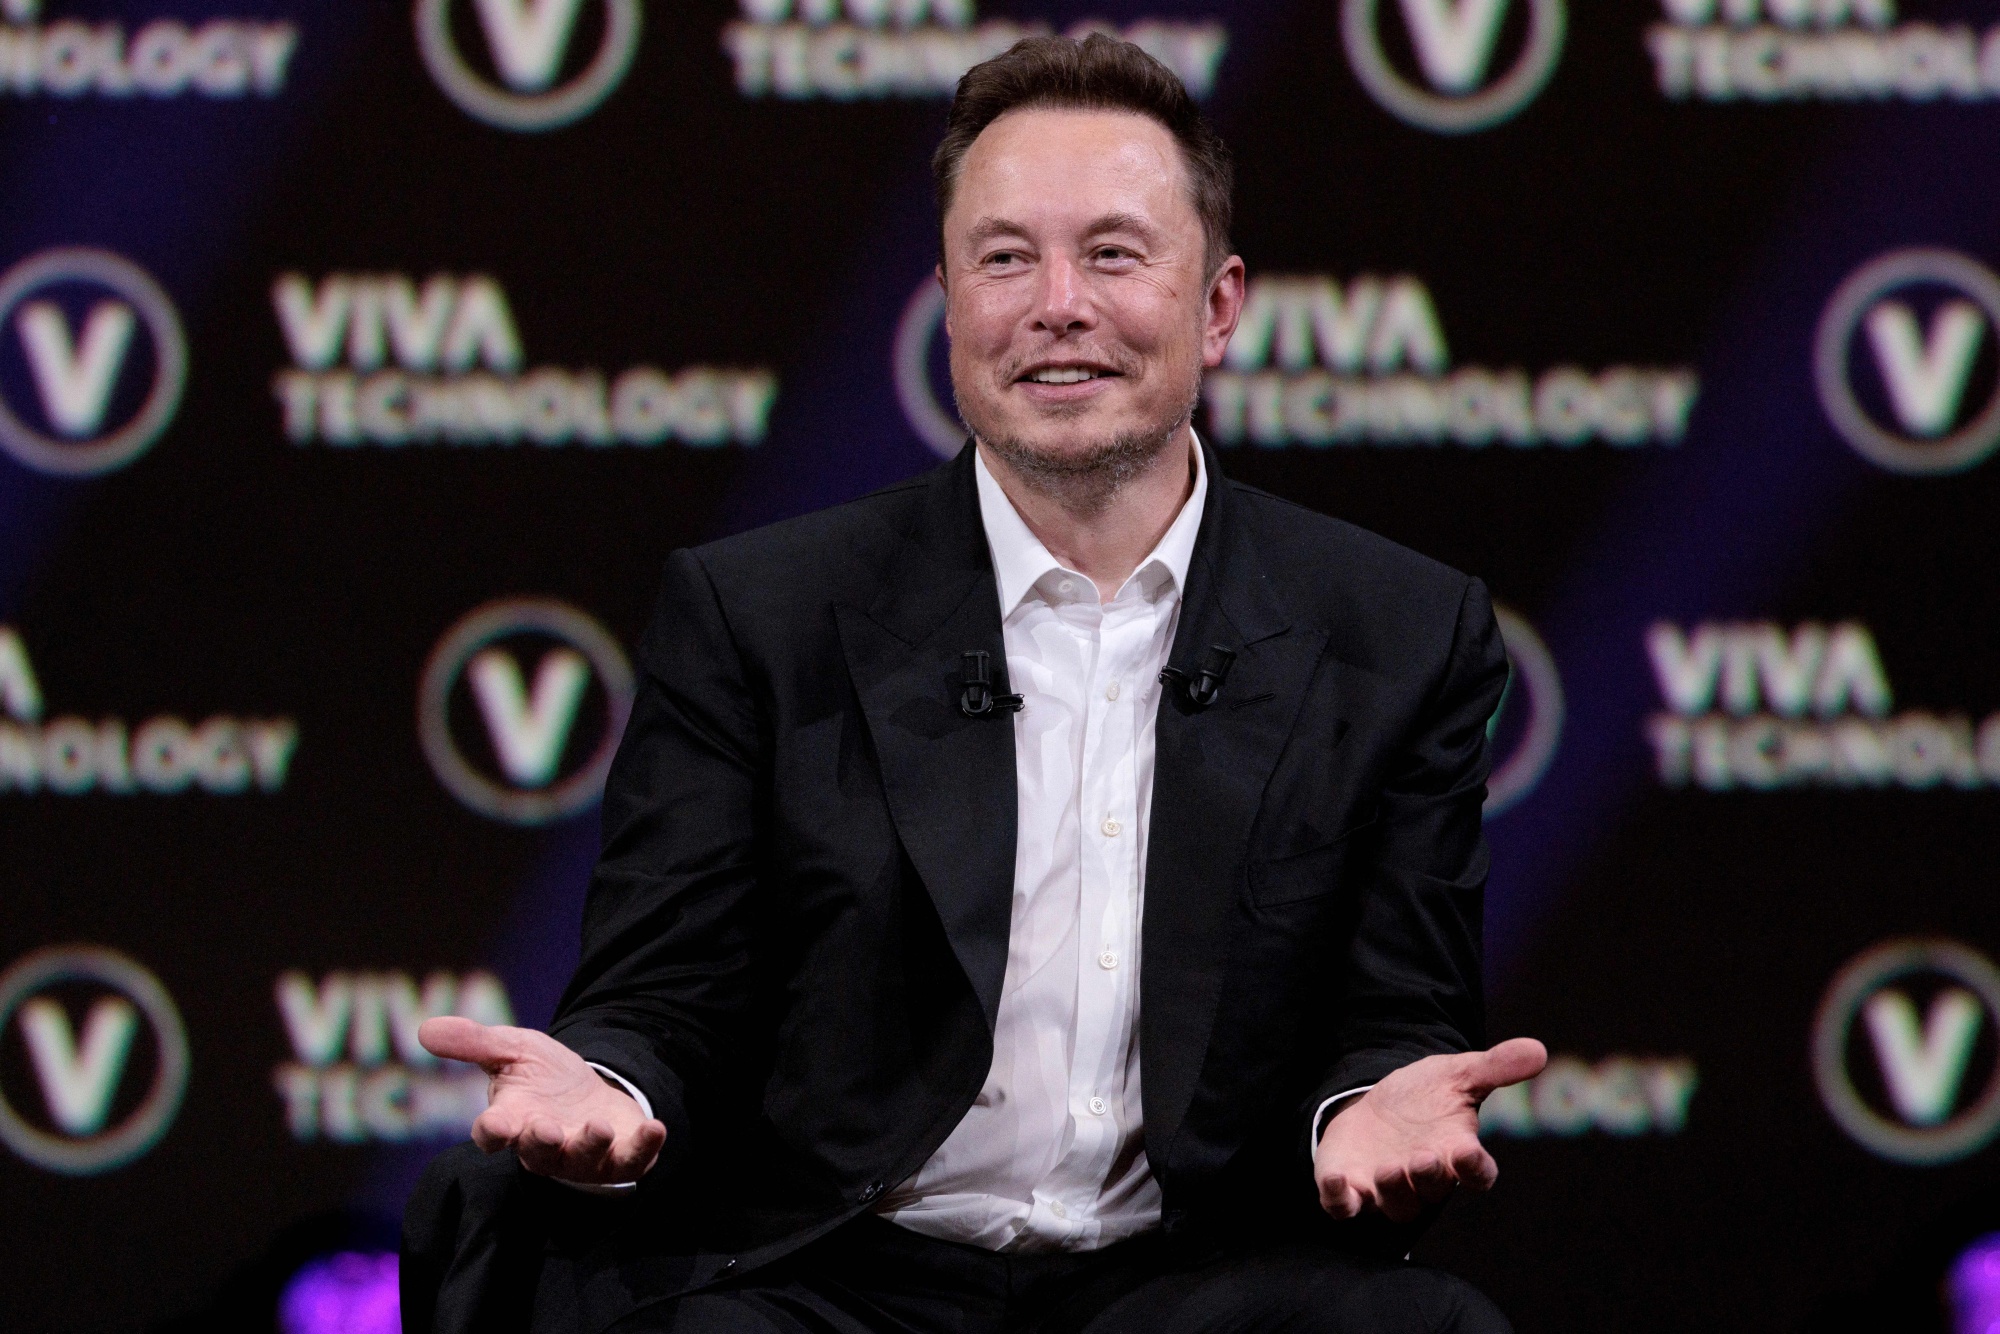 Elon Musk Has Rebranded Twitter to 'X'—Here's Musk's Net Worth